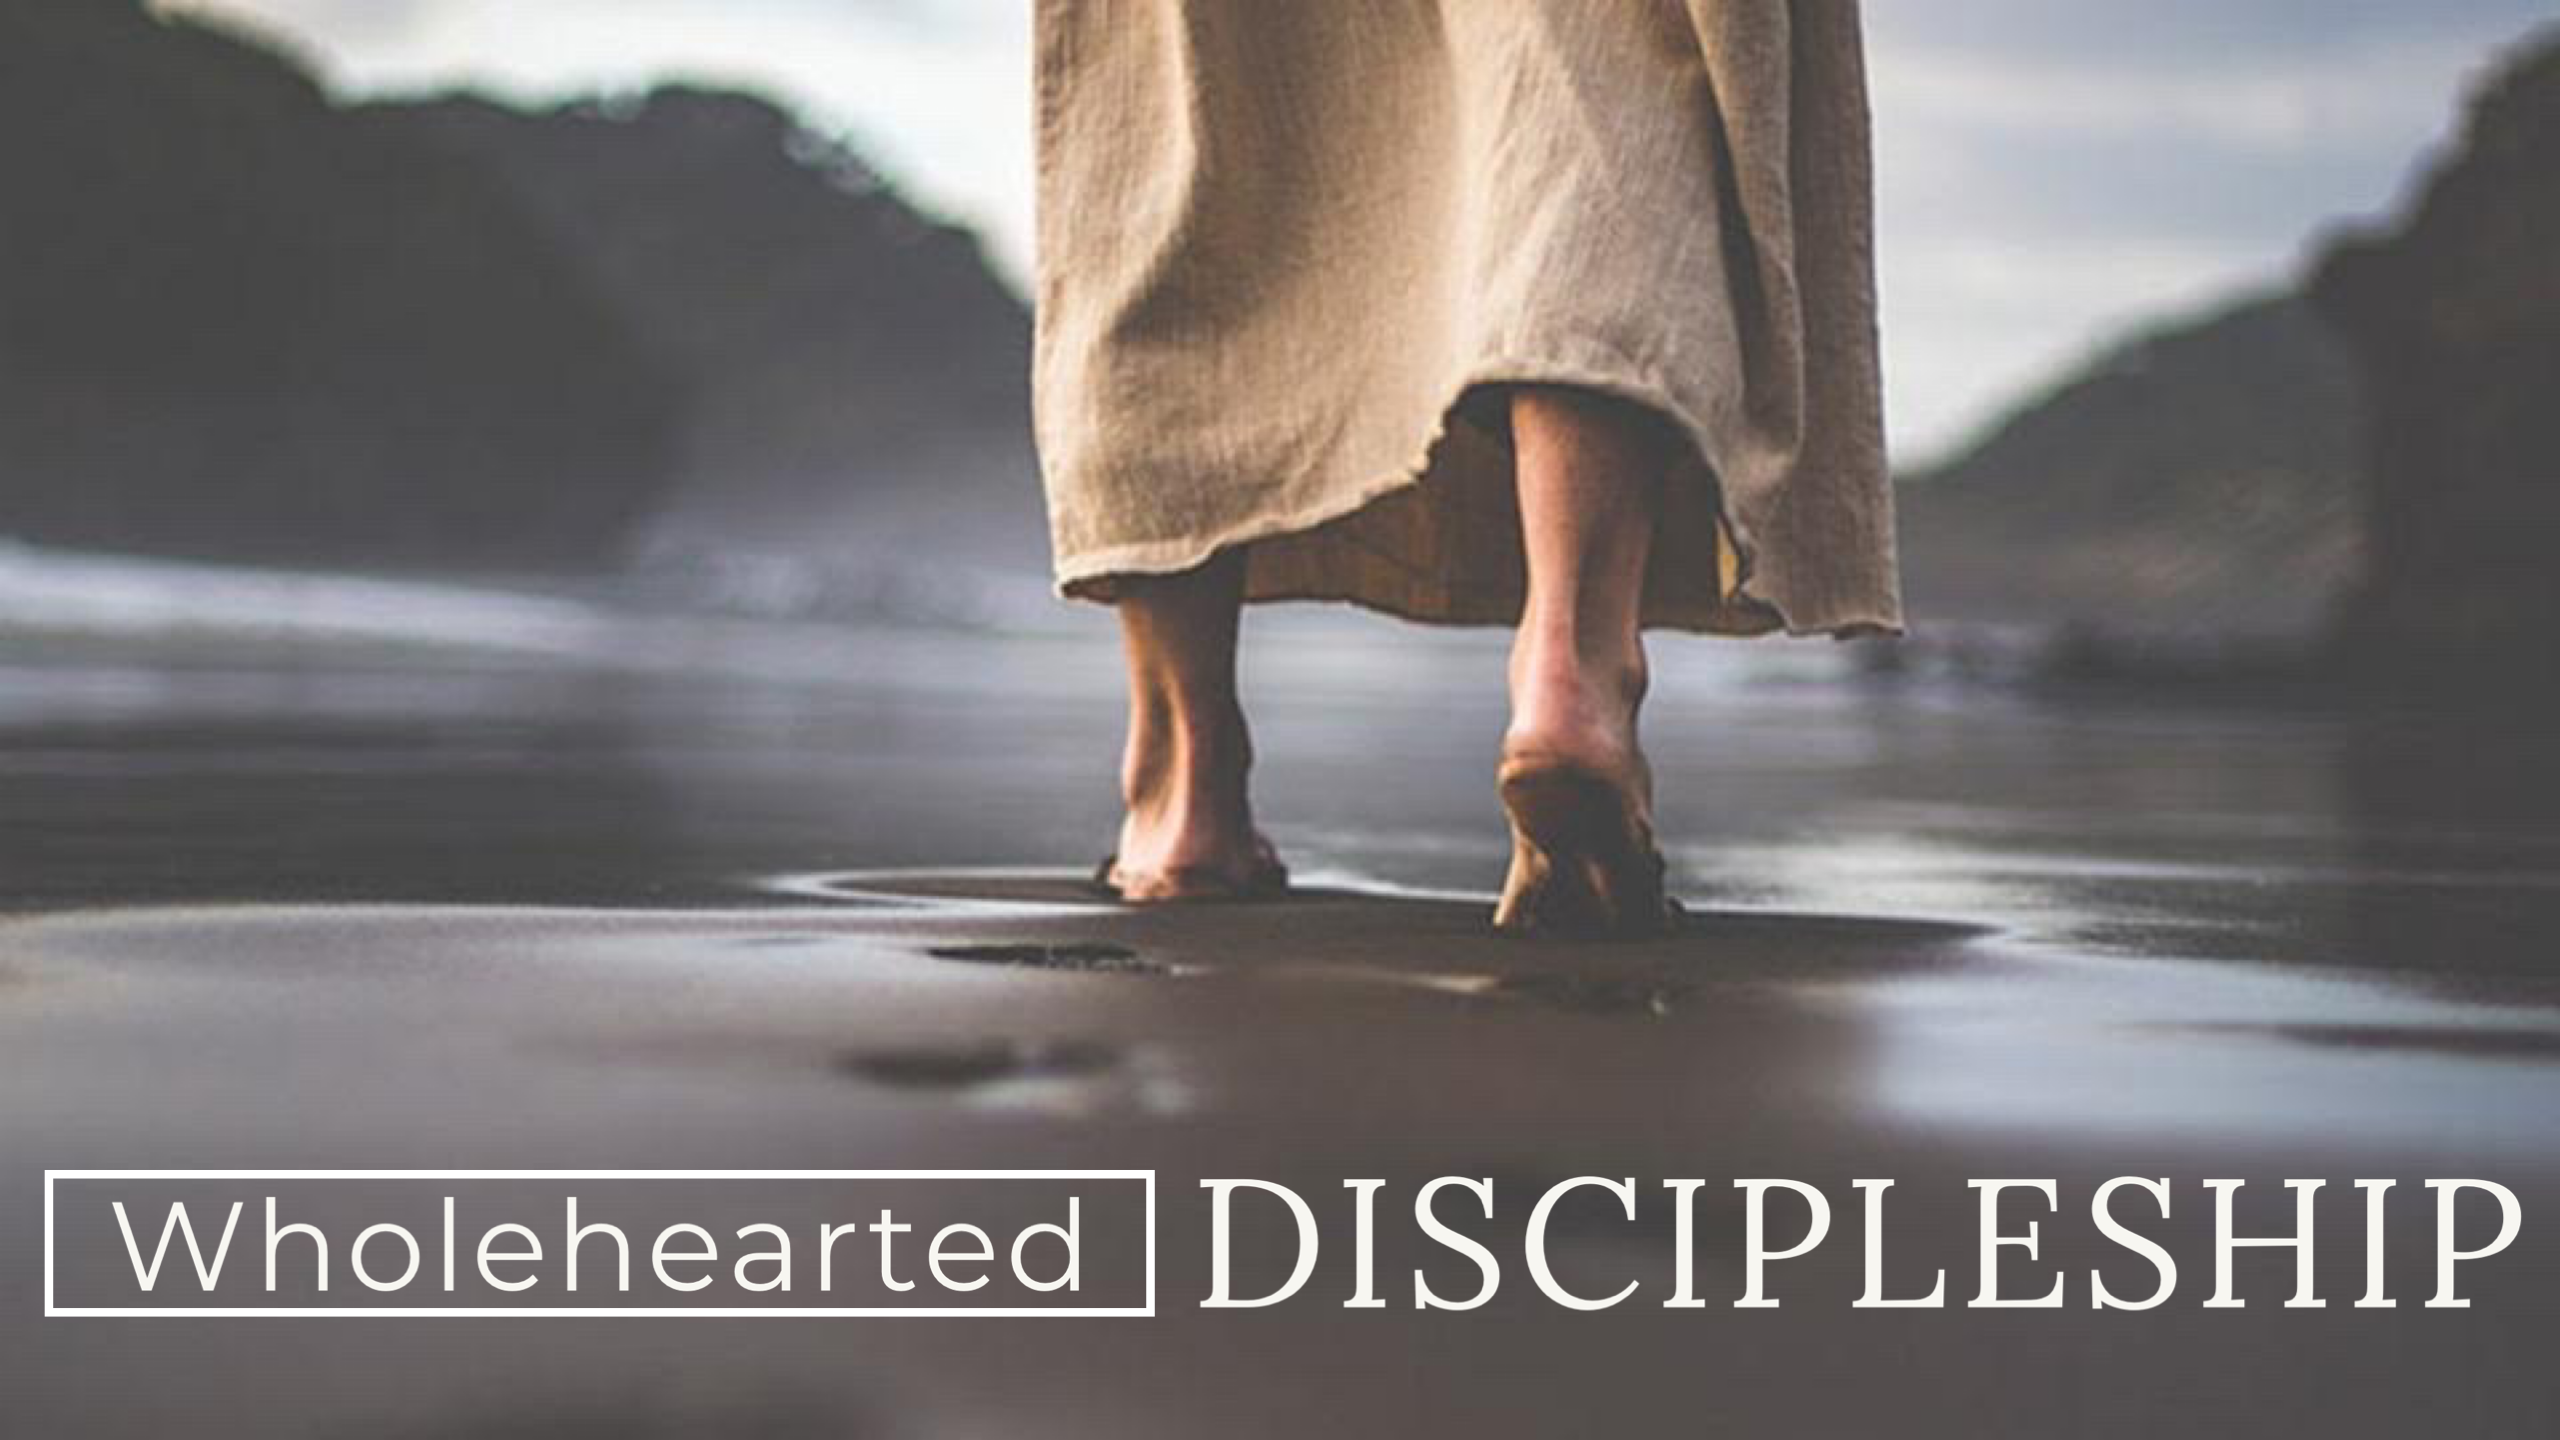 The Call to Discipleship